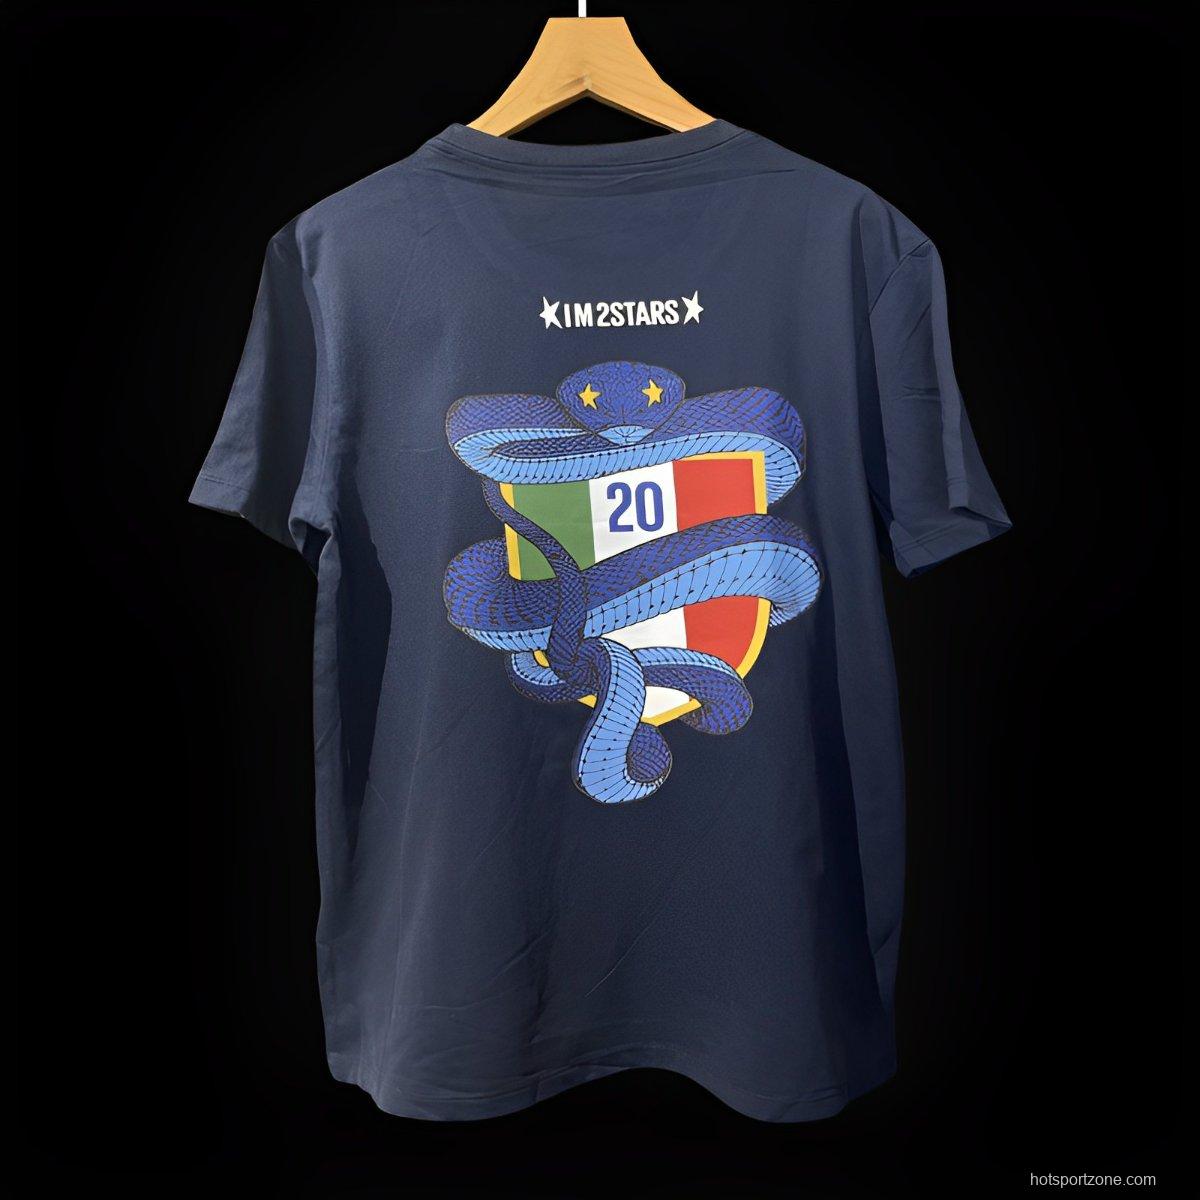 23/24 Inter Milan CAMPIONI D'ITALIA Navy T-Shirts With Snake Pattern